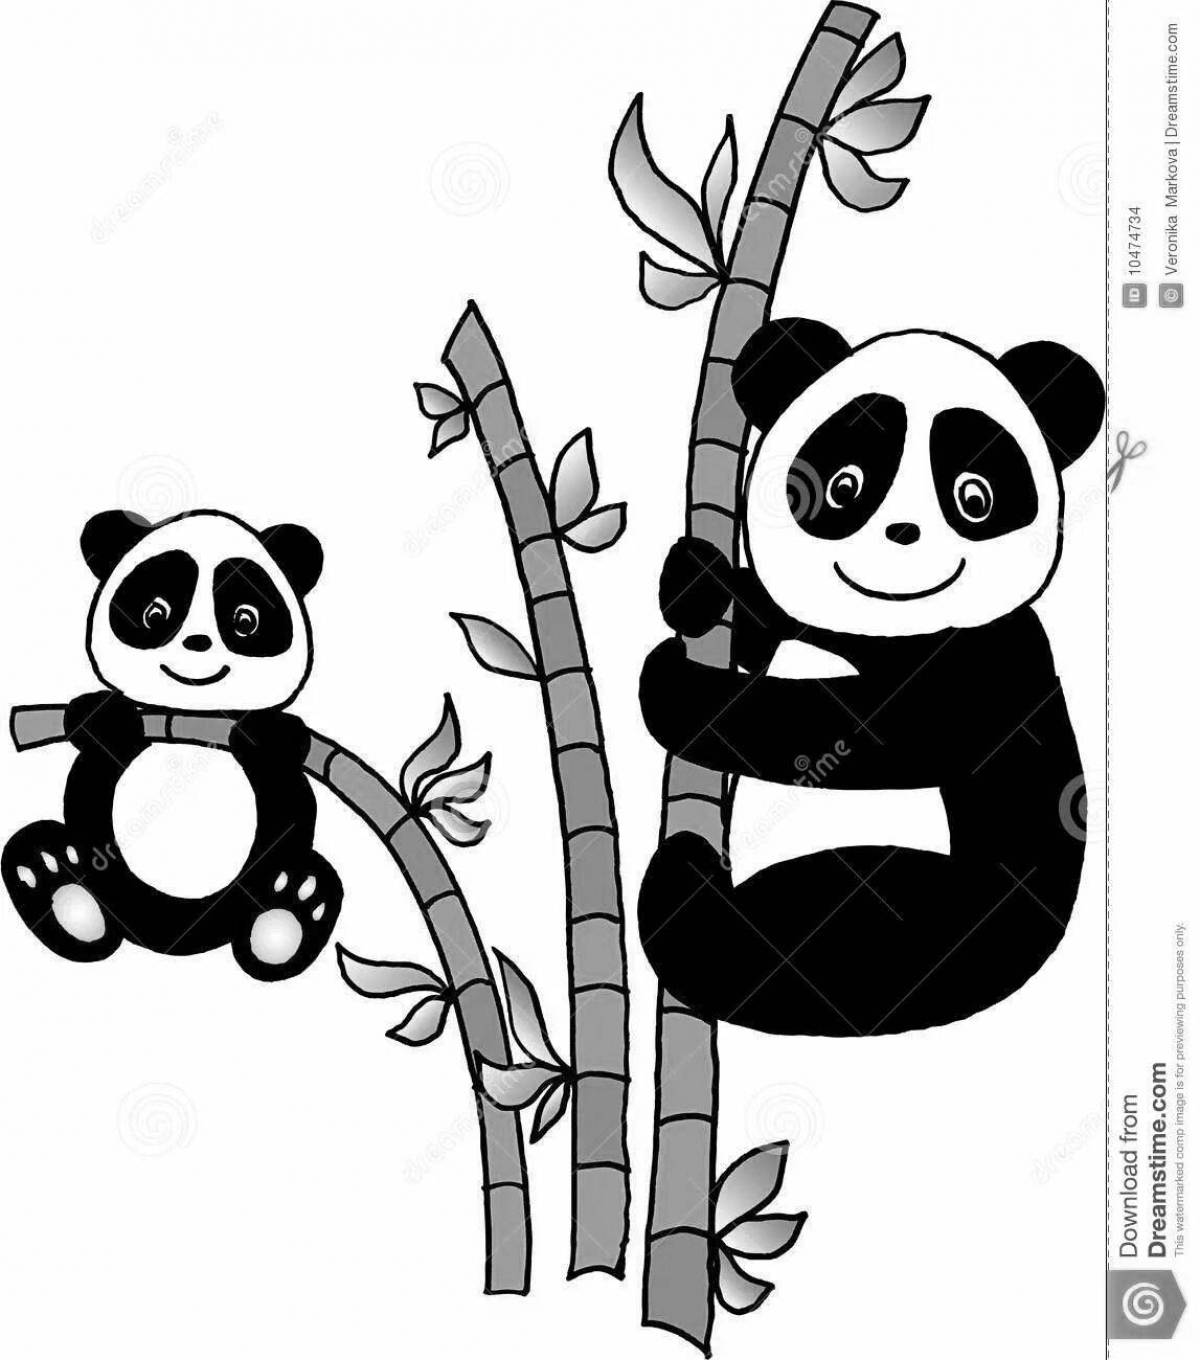 Fun panda coloring book with bamboo